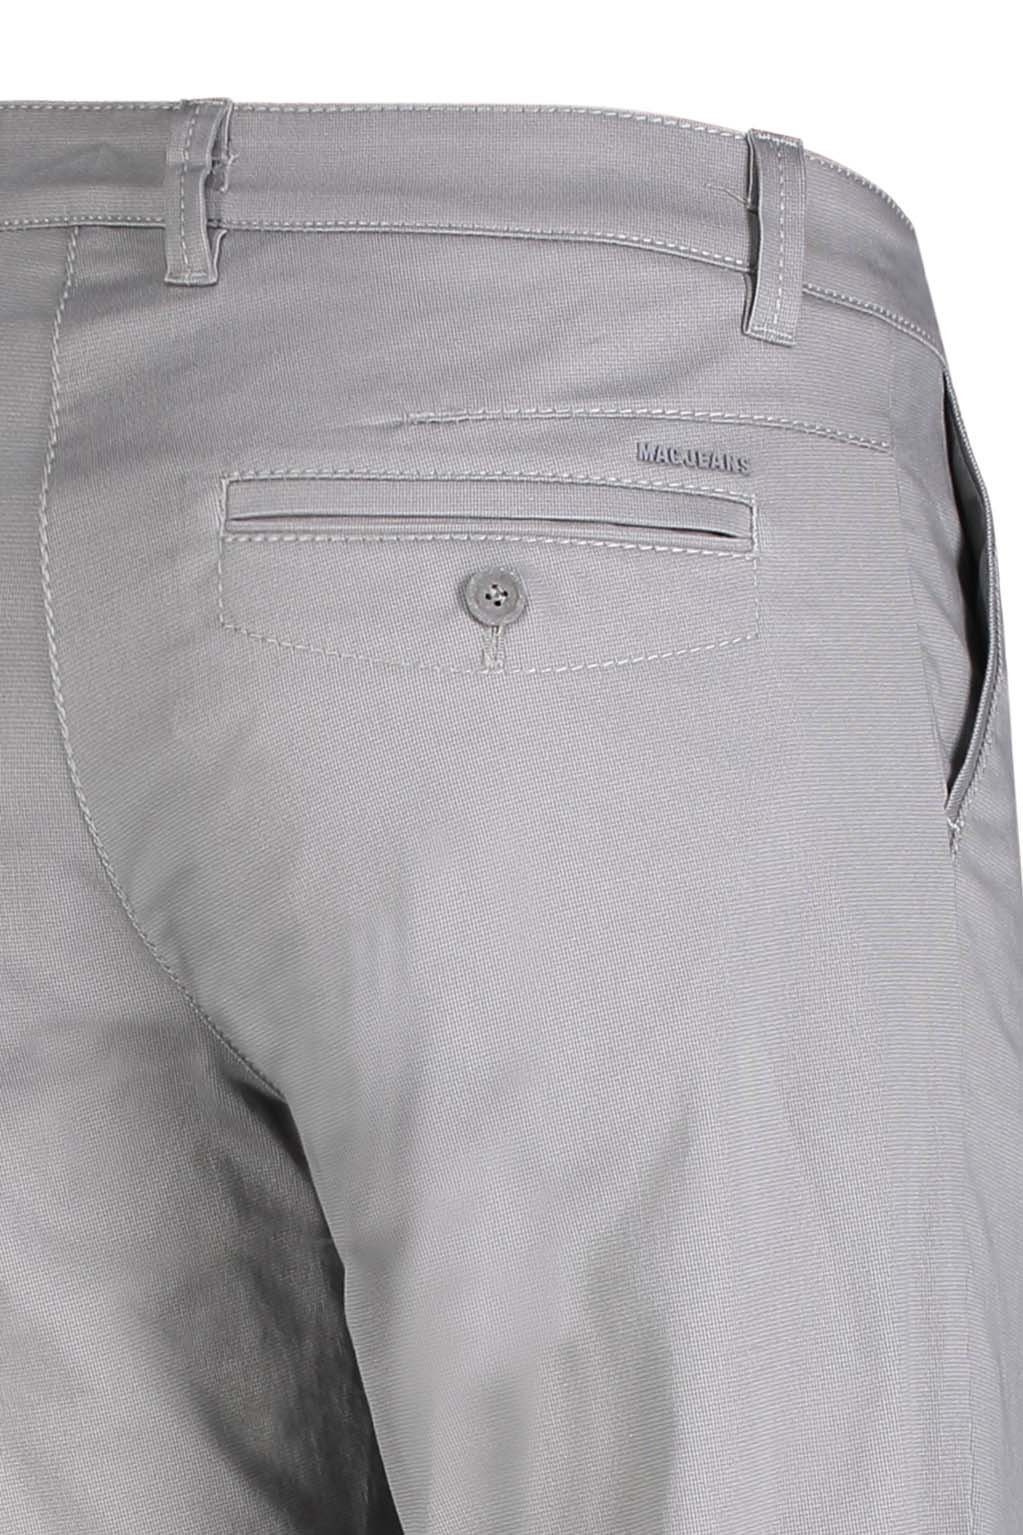 MAC 5-Pocket-Jeans MAC LENNOX 6365-00-0670L platinum grey 042B printed